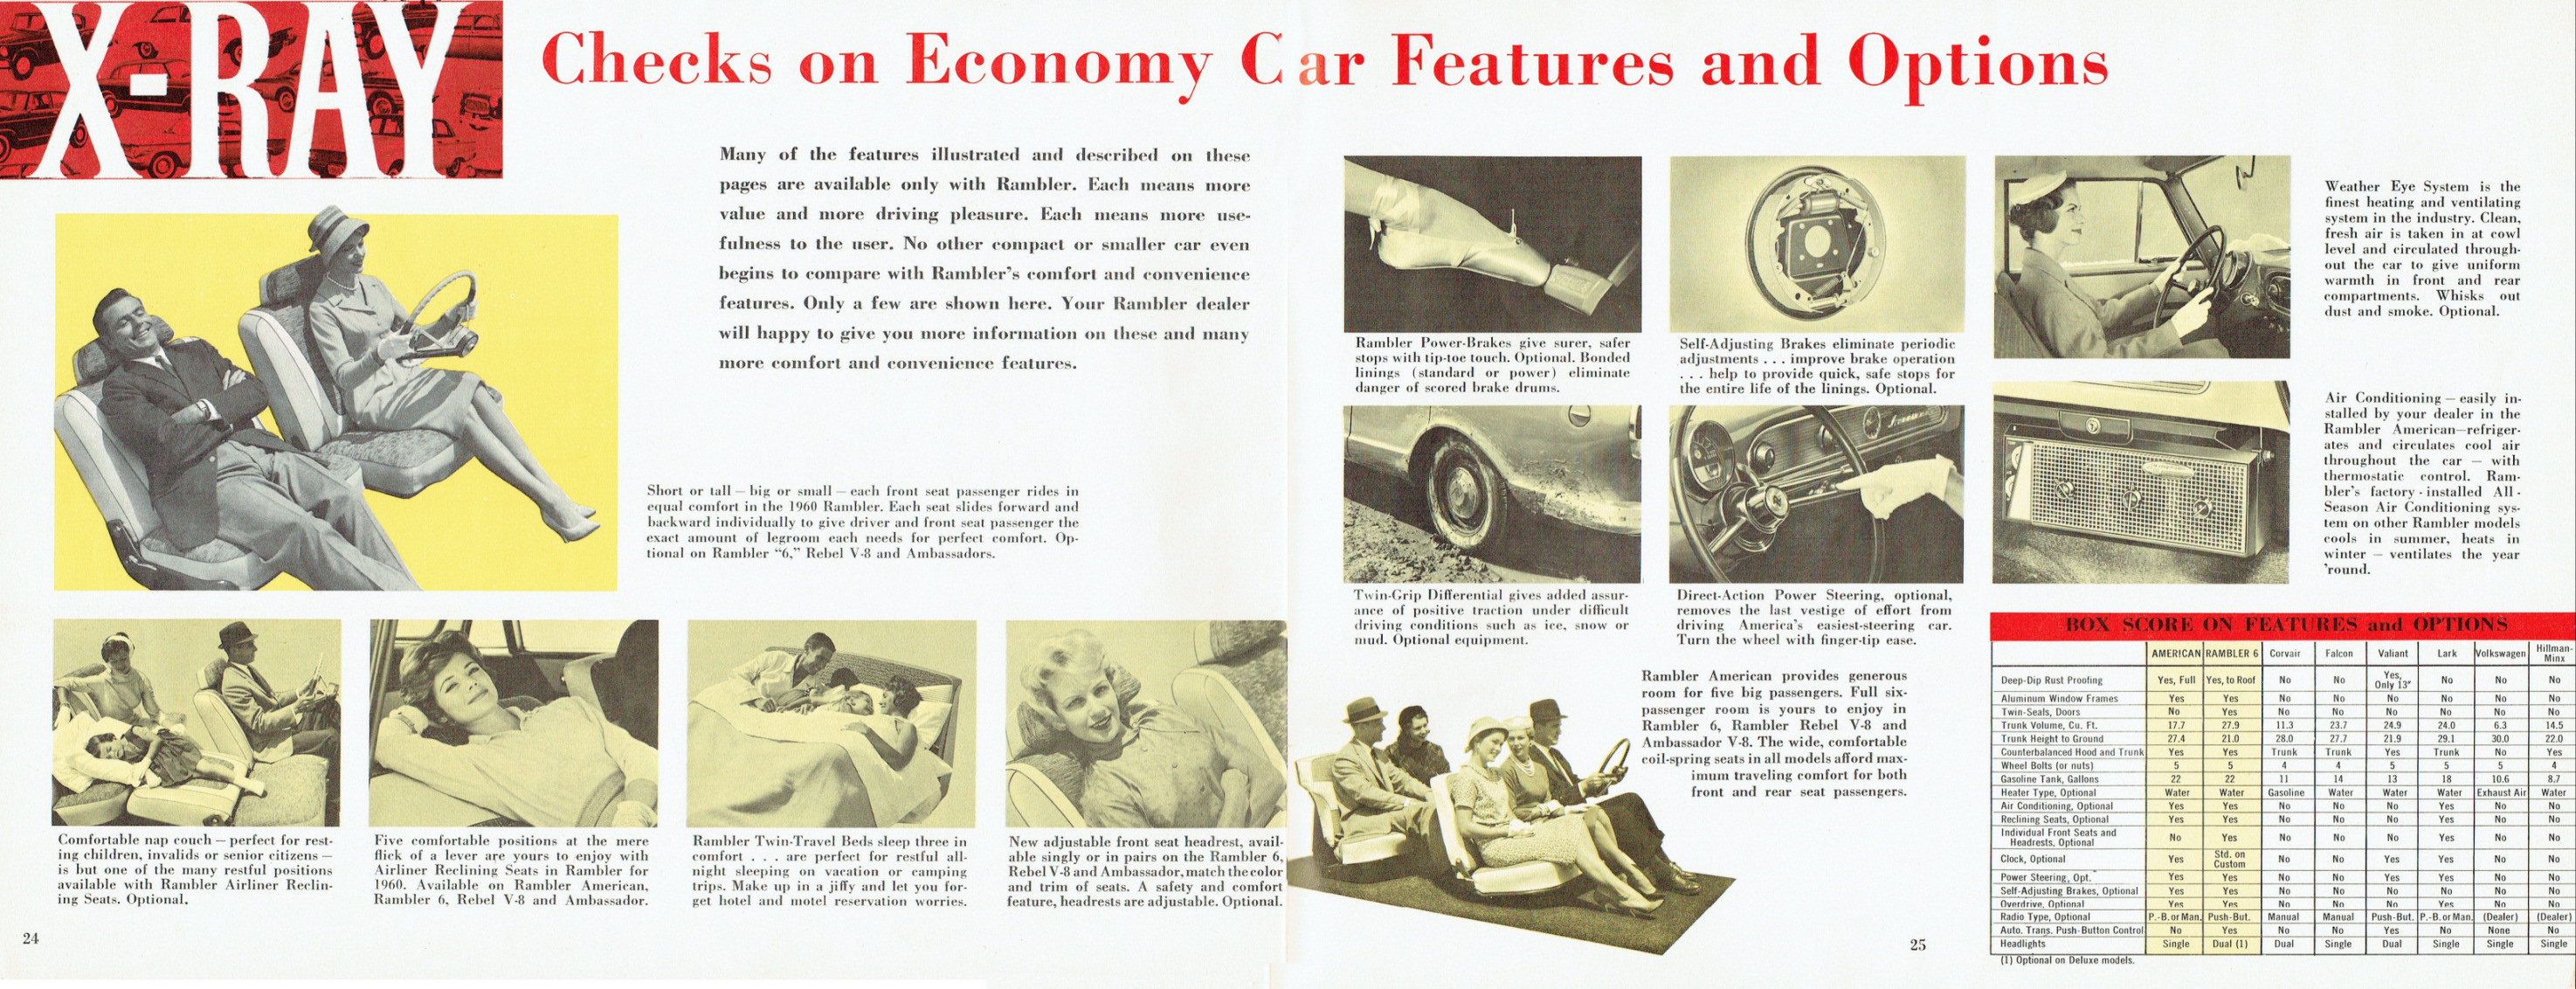 1960_X-Ray_AMC_Economy_Cars-24-25